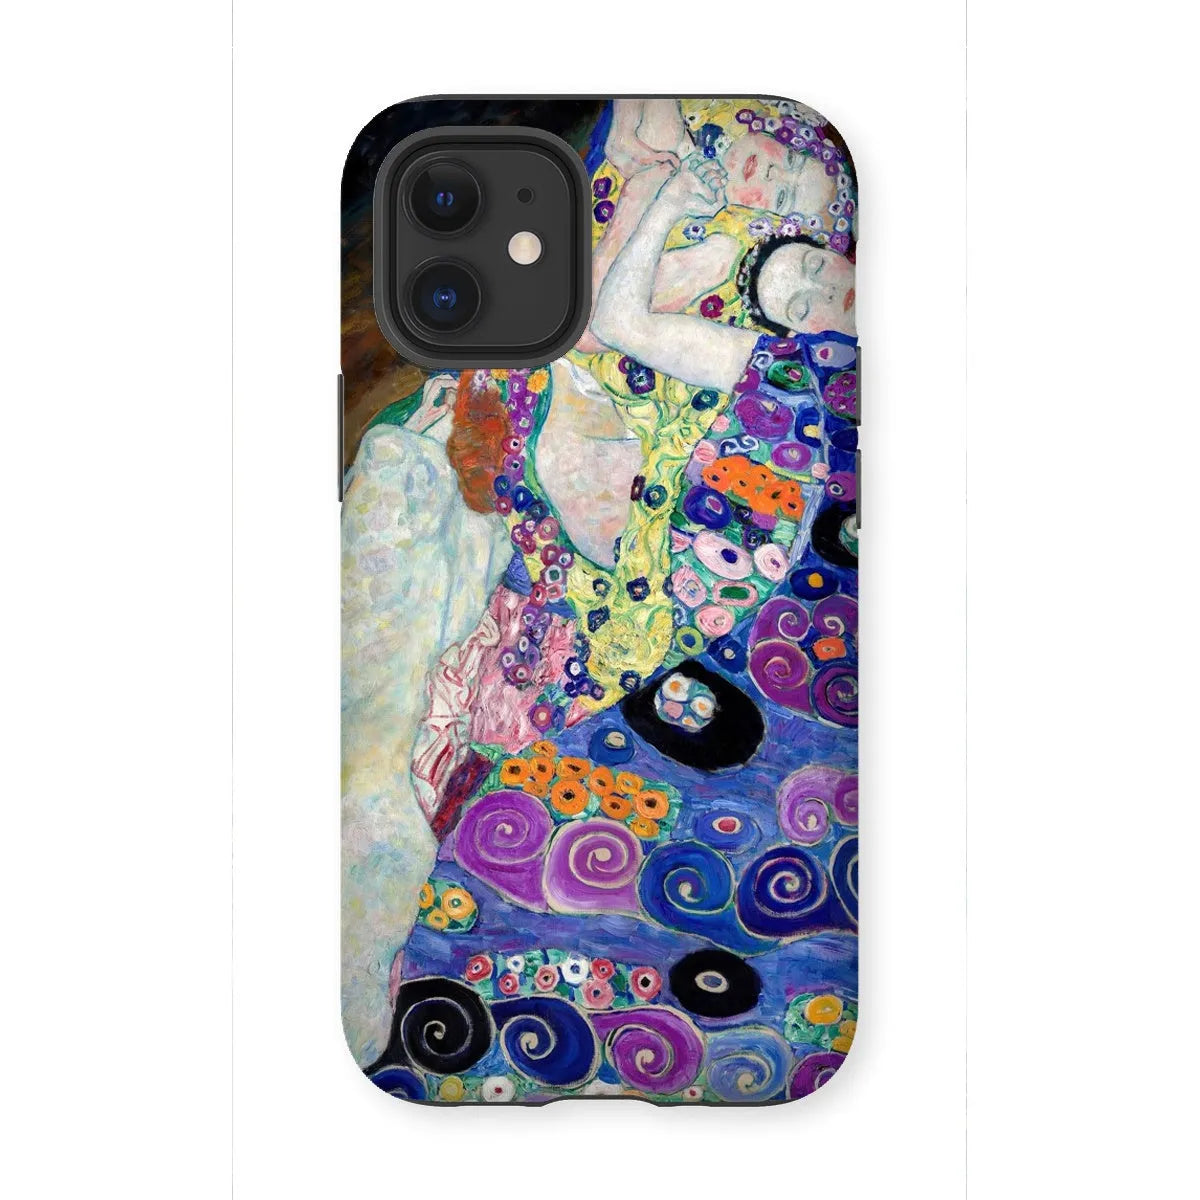 The Virgin - Vienna Secession Phone Case - Gustav Klimt - Iphone 12 Mini / Matte - Mobile Phone Cases - Aesthetic Art